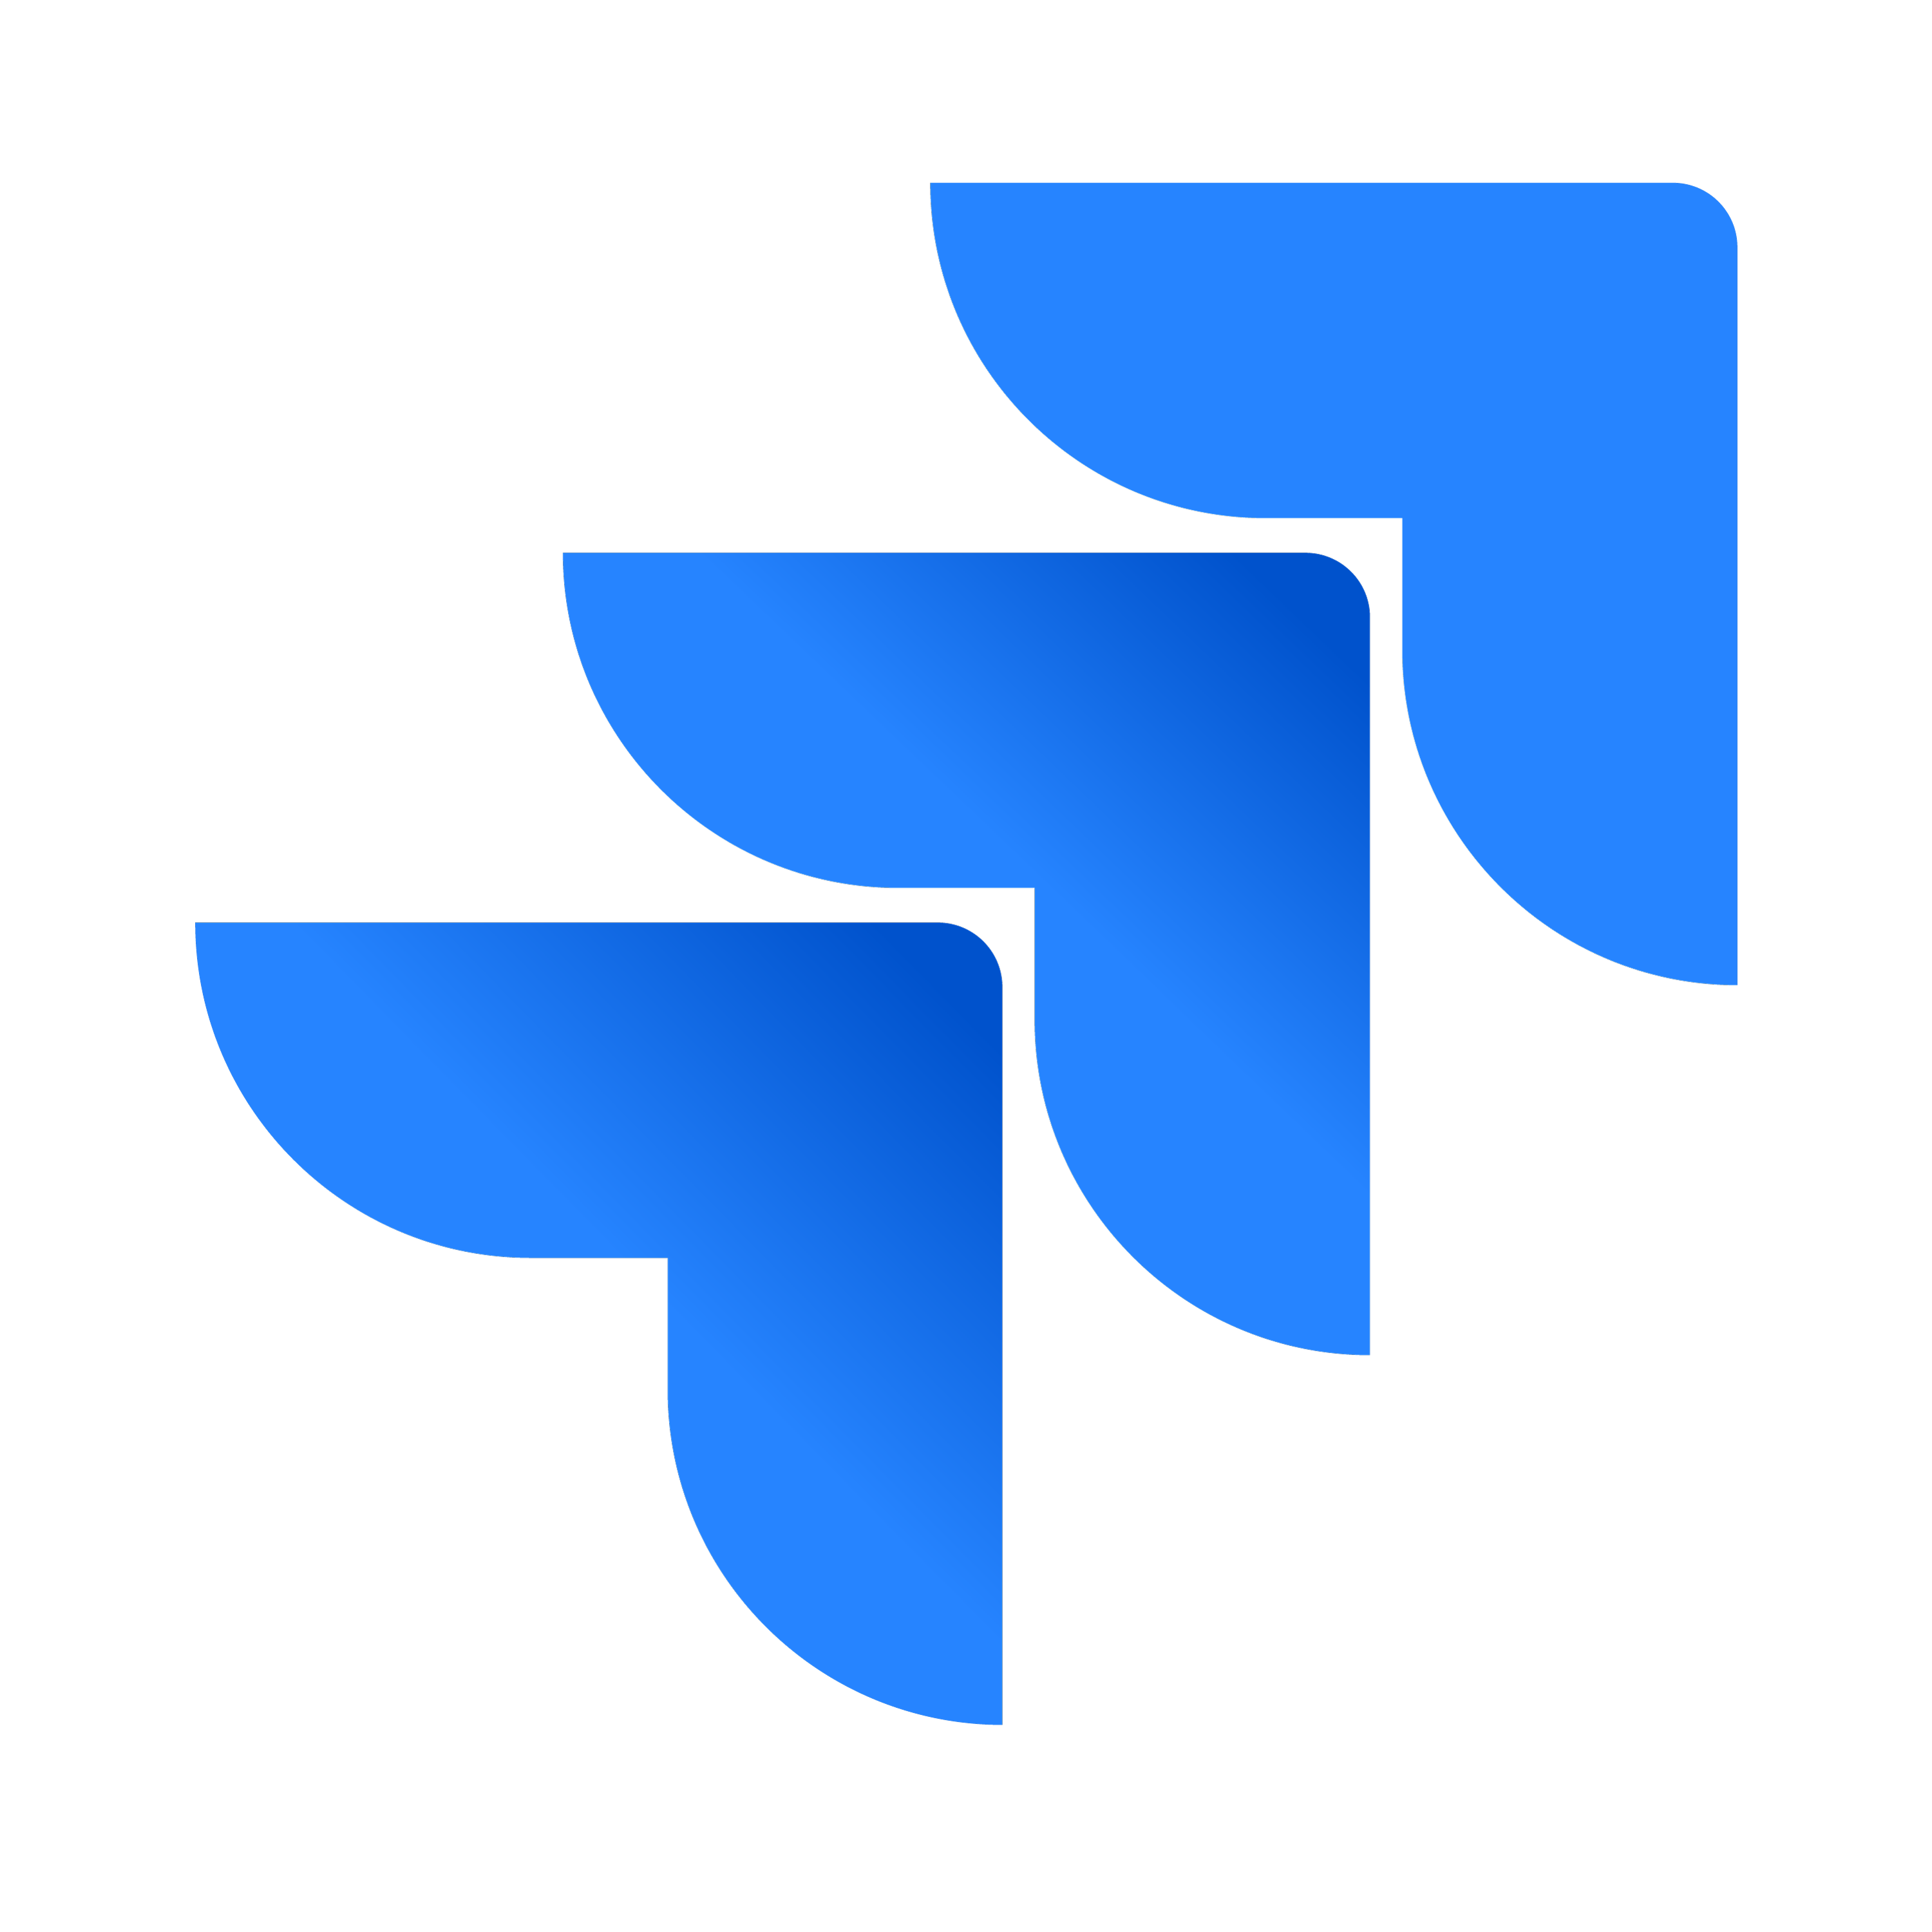 Jira-logo